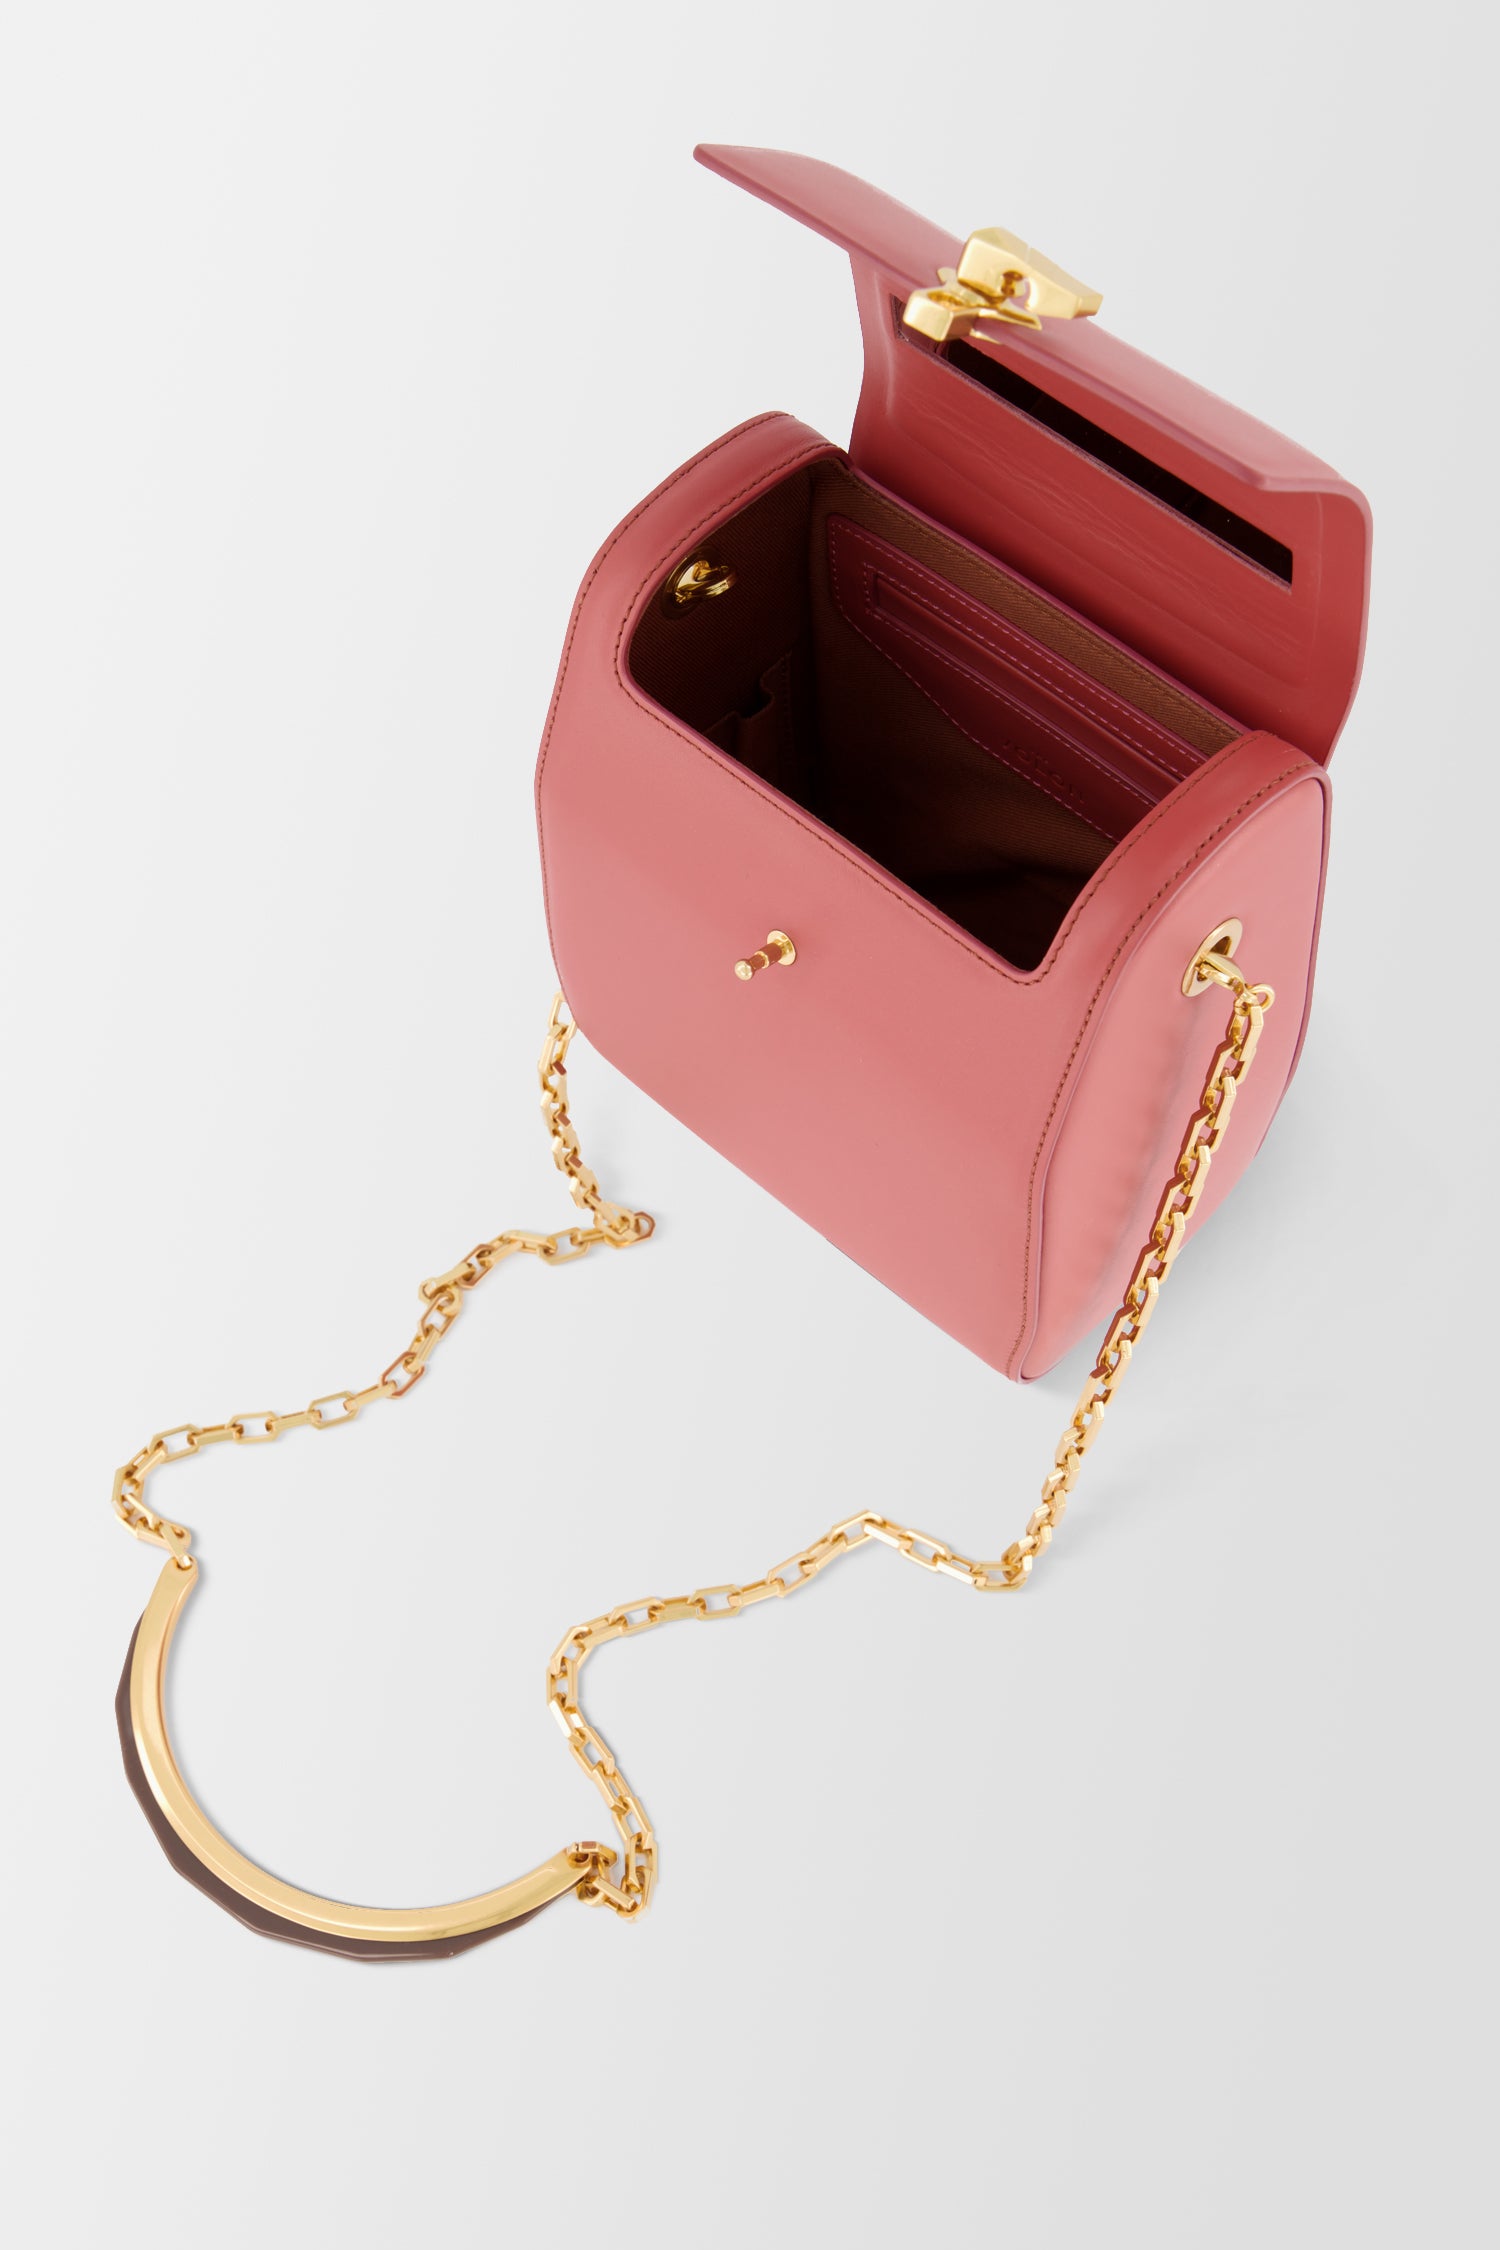 The Volon Pink PO Leather Box Bag